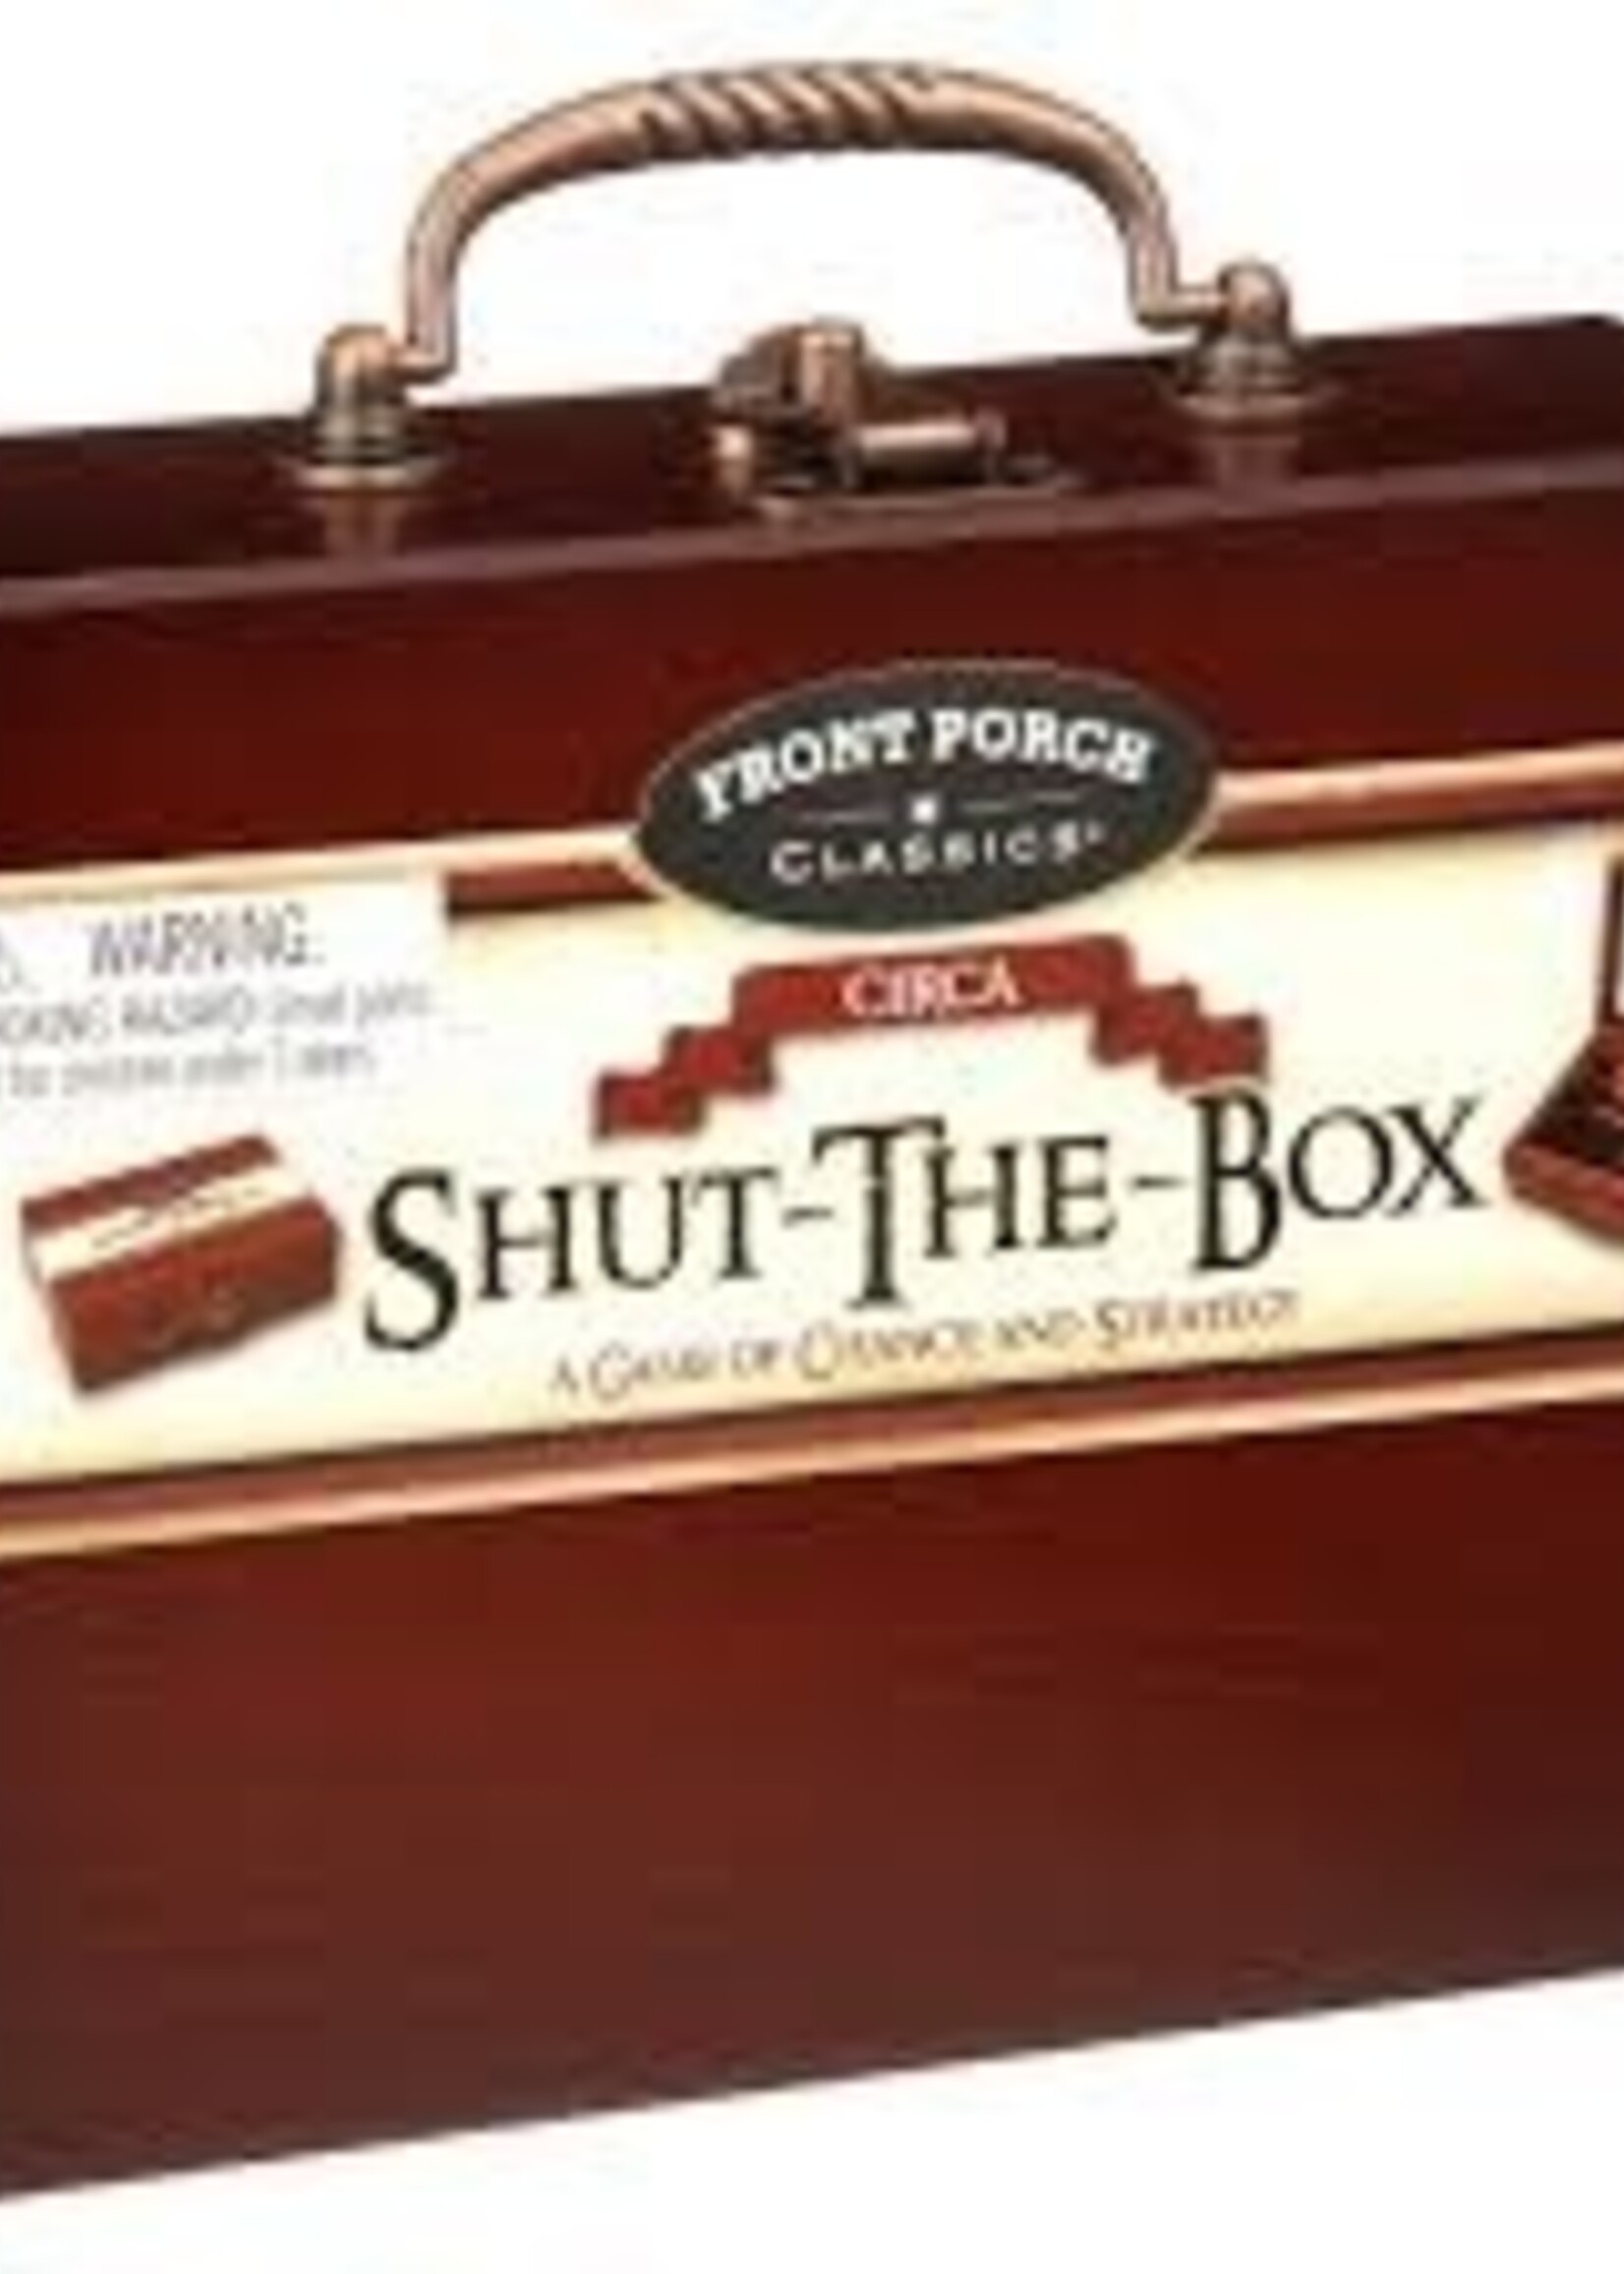 Game - Circa: Shut-the-Box